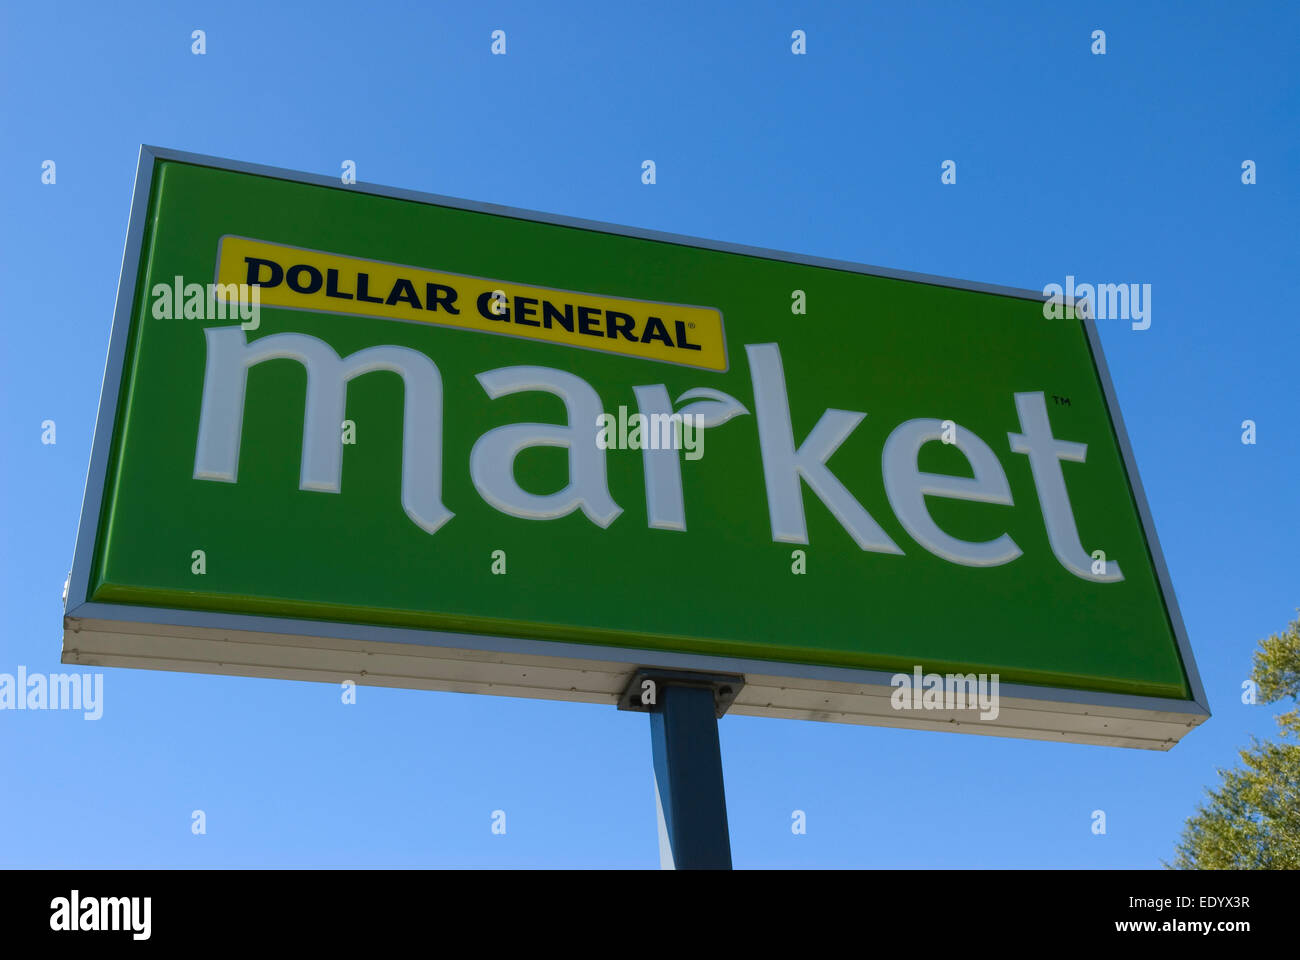 Dollar General Market sign USA Stock Photo